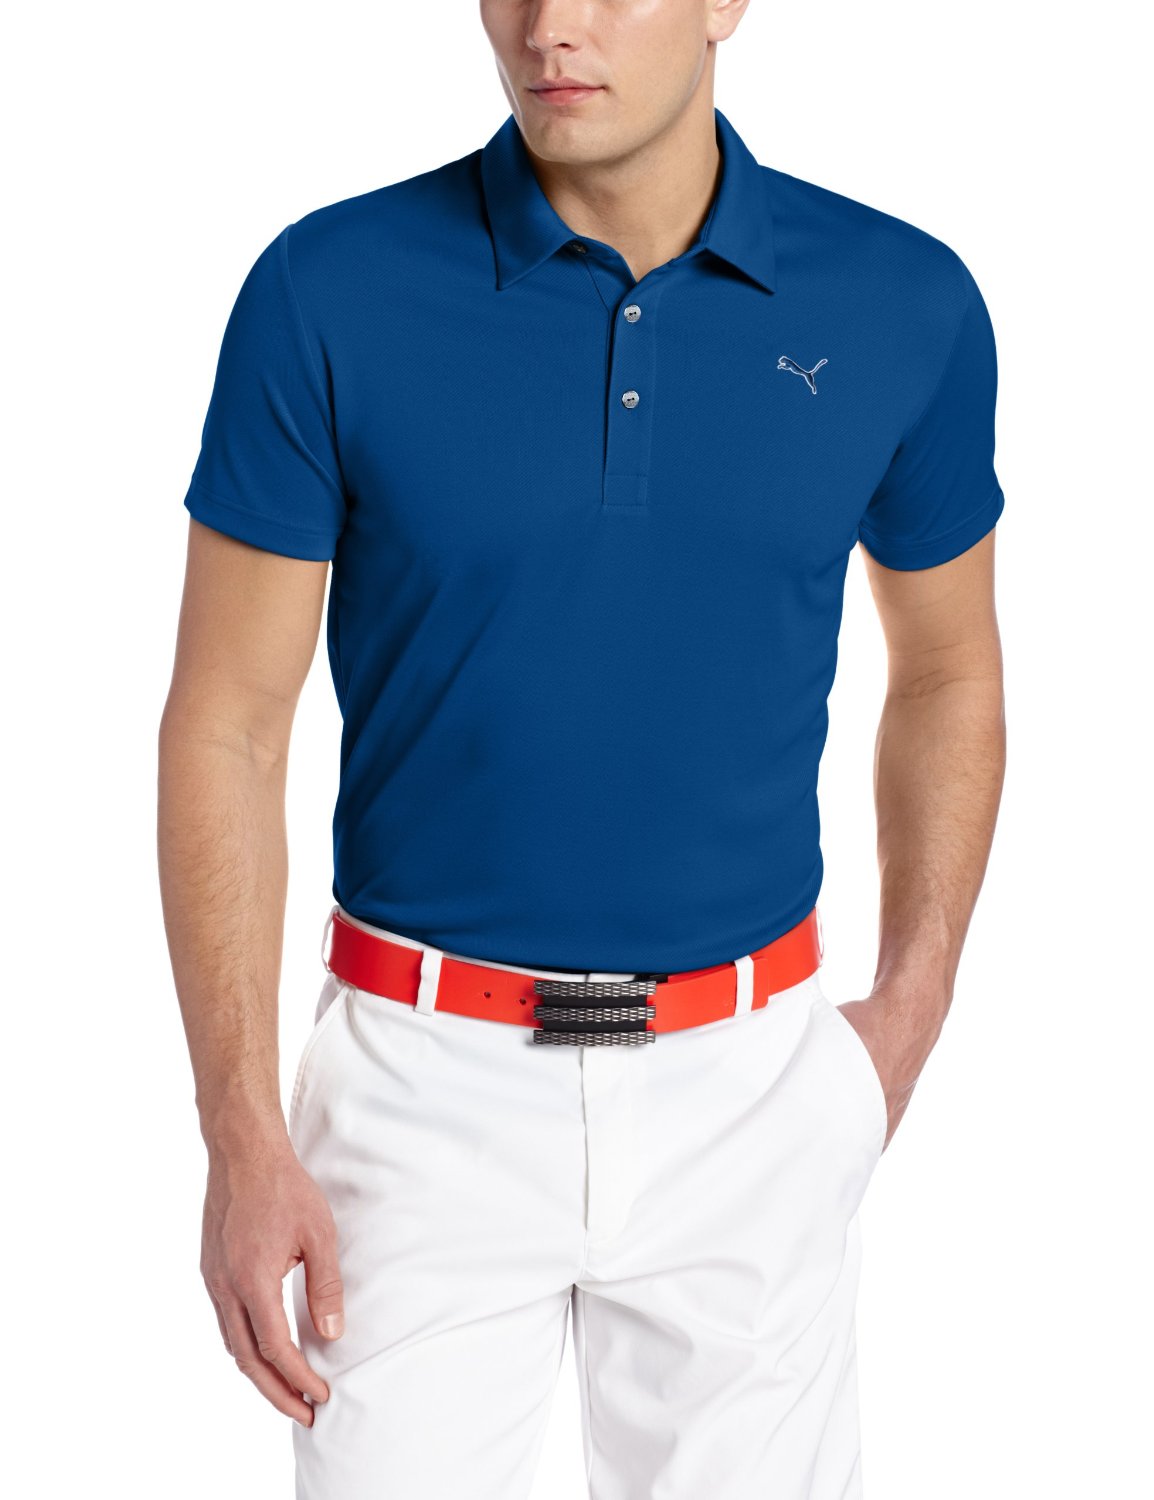 Puma Mens NA Tech Golf Polo Shirts